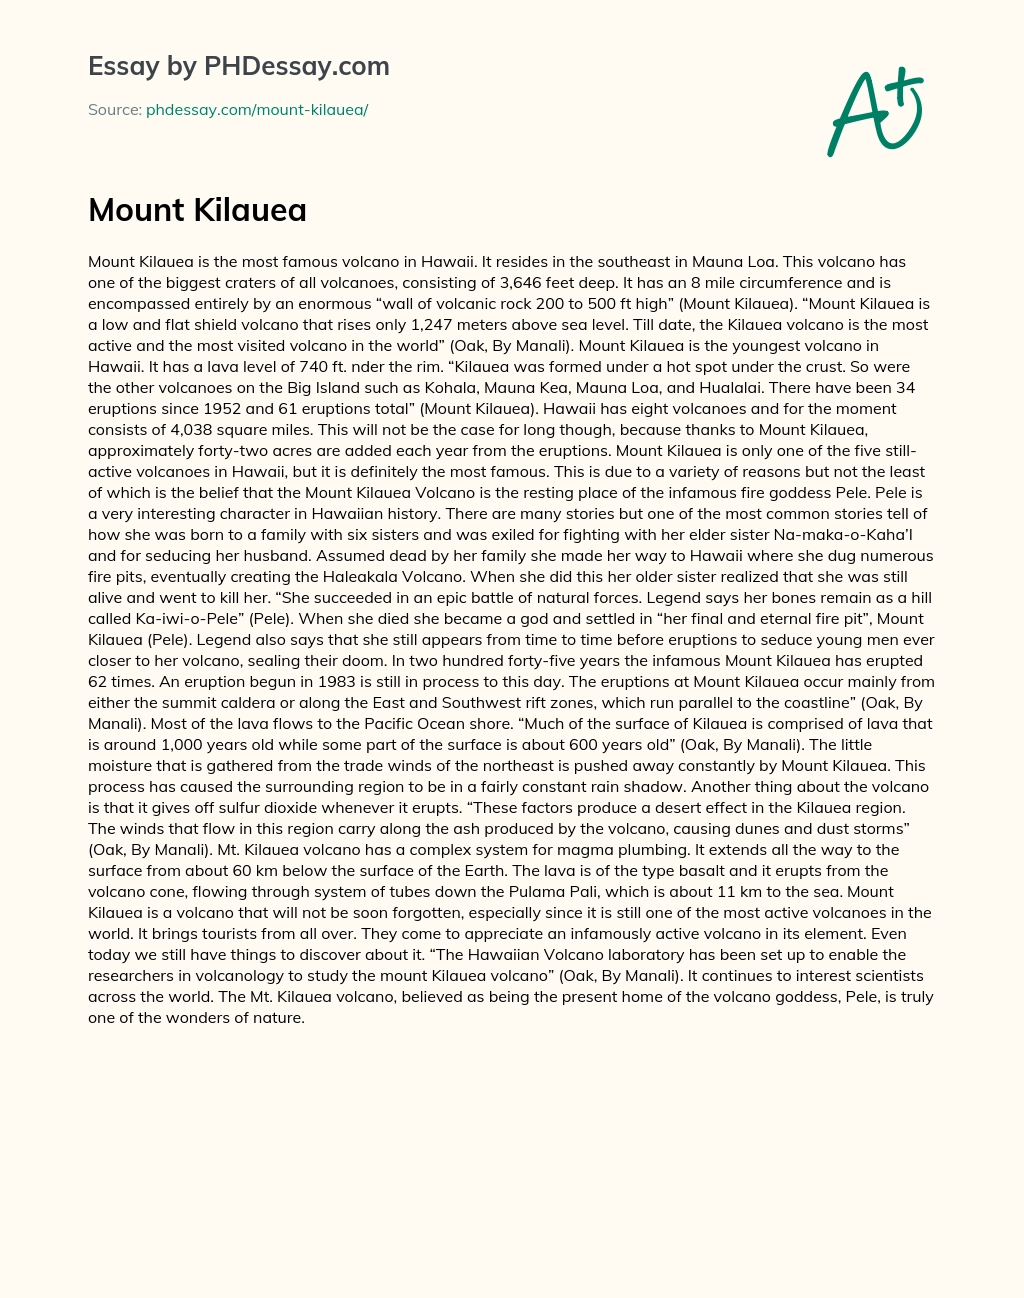 Mount Kilauea essay